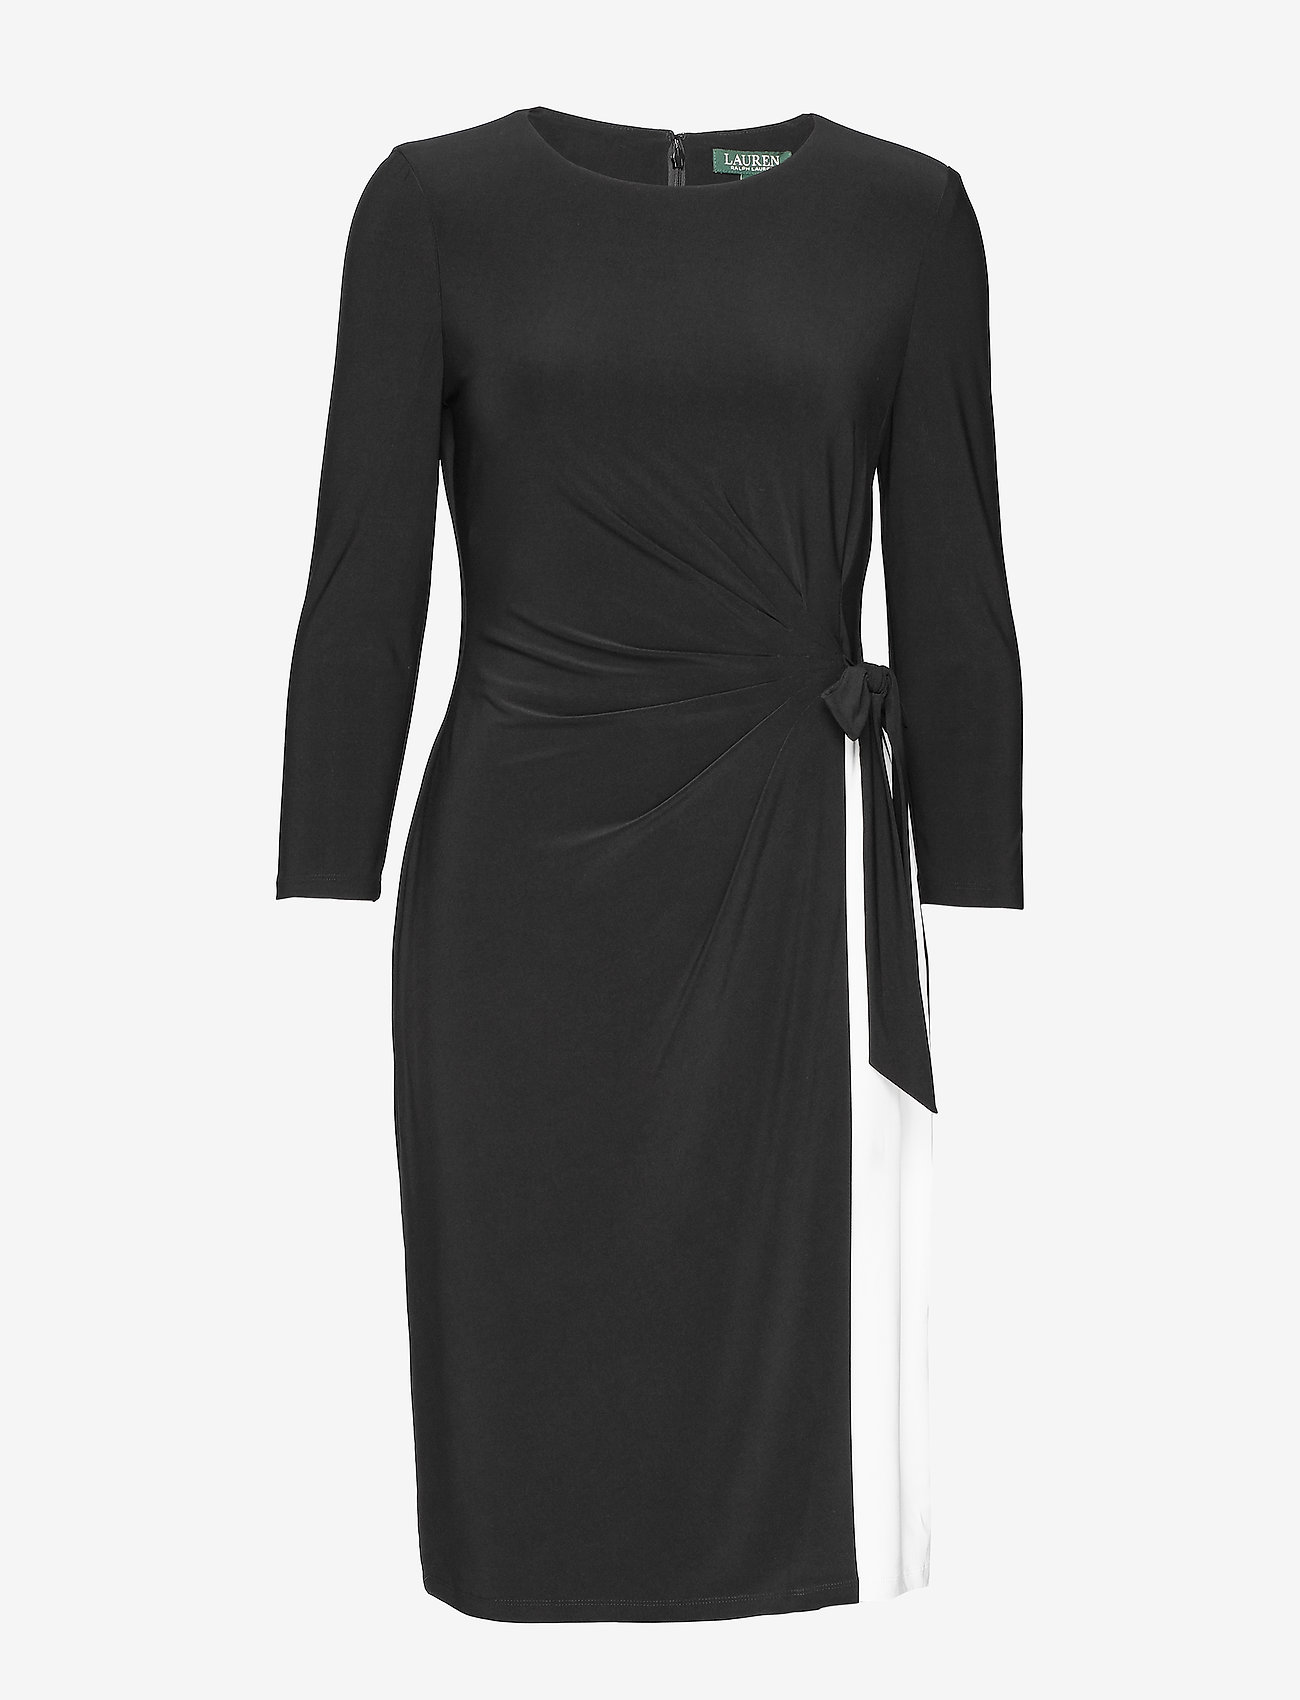 Two-tone Jersey Dress (Black/lauren 